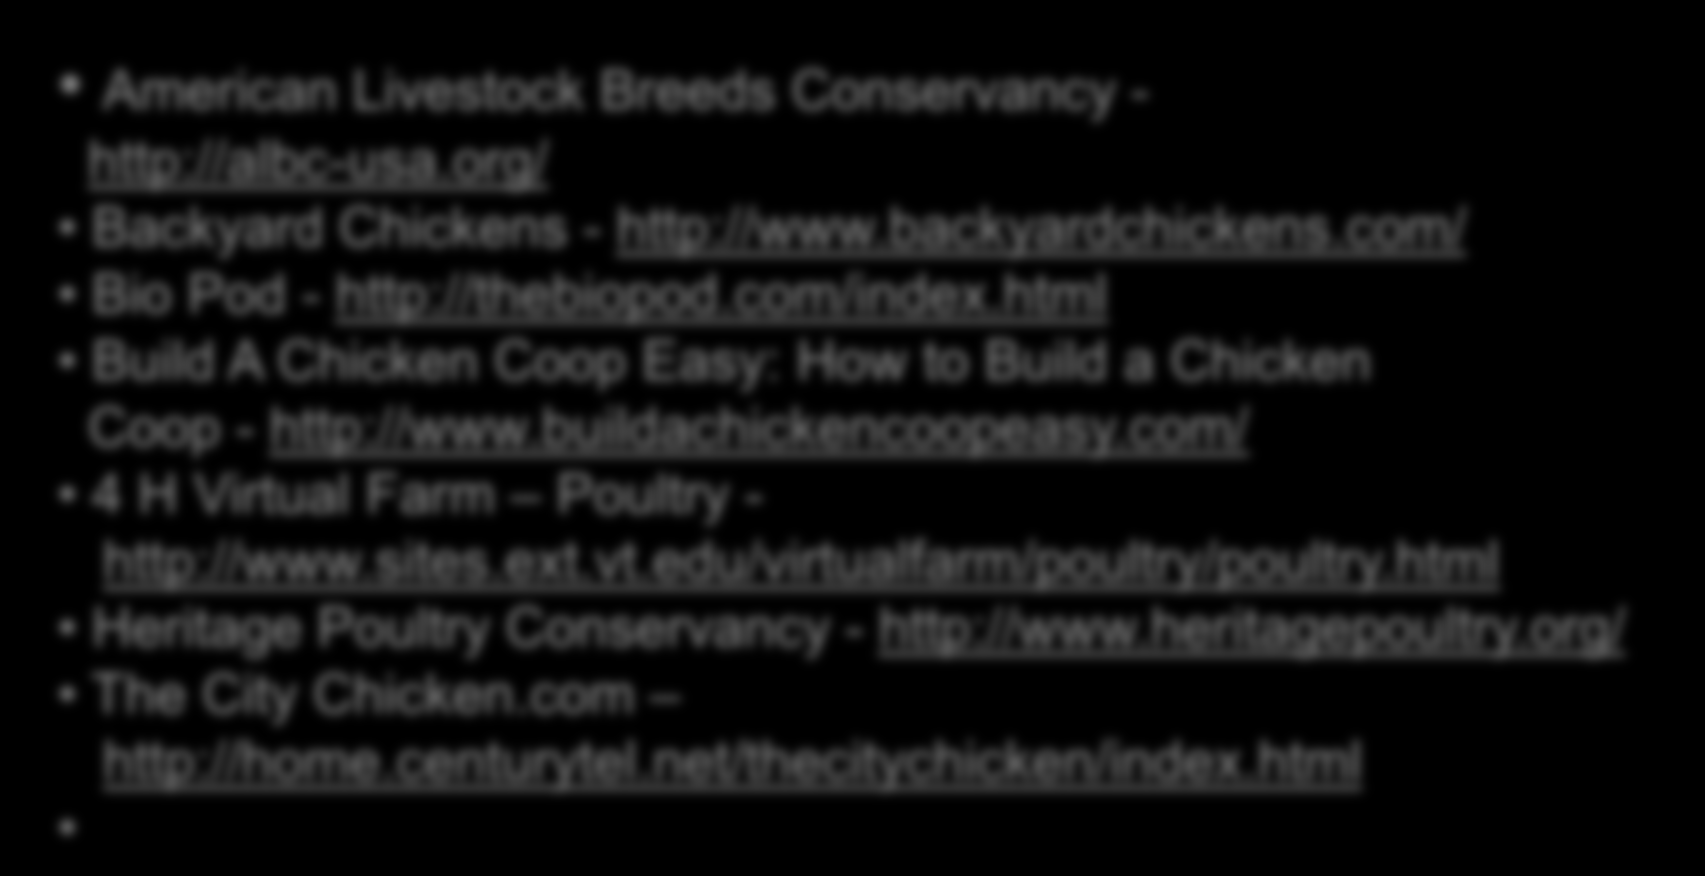 ONLINE RESOURCES 1 American Livestock Breeds Conservancy - http://albc-usa.org/ Backyard Chickens - http://www.backyardchickens.com/ Bio Pod - http://thebiopod.com/index.